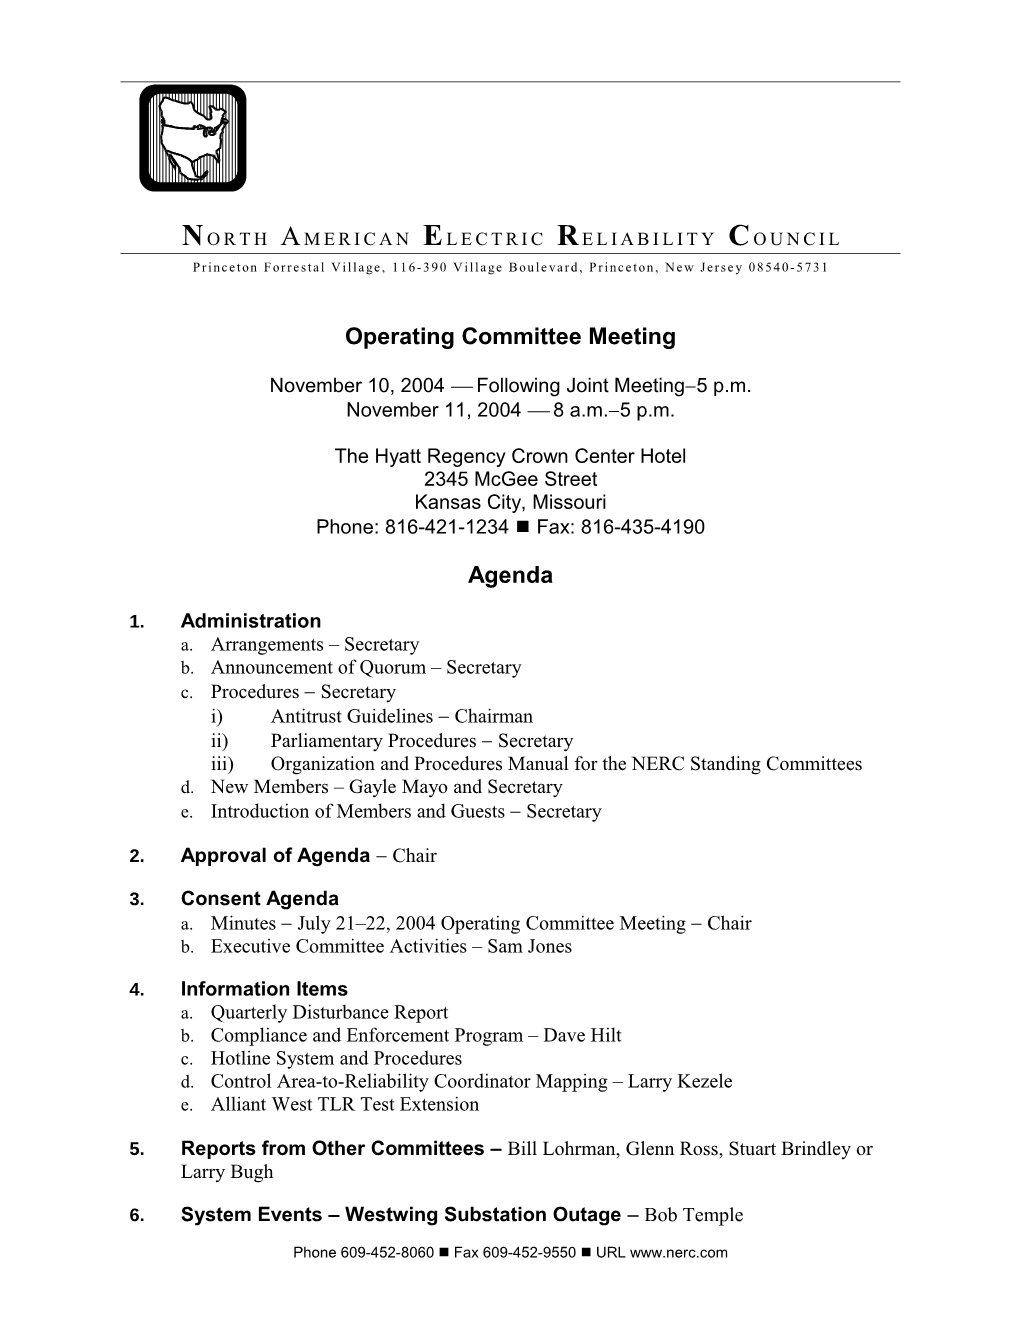 Operating Committee Meeting Agenda